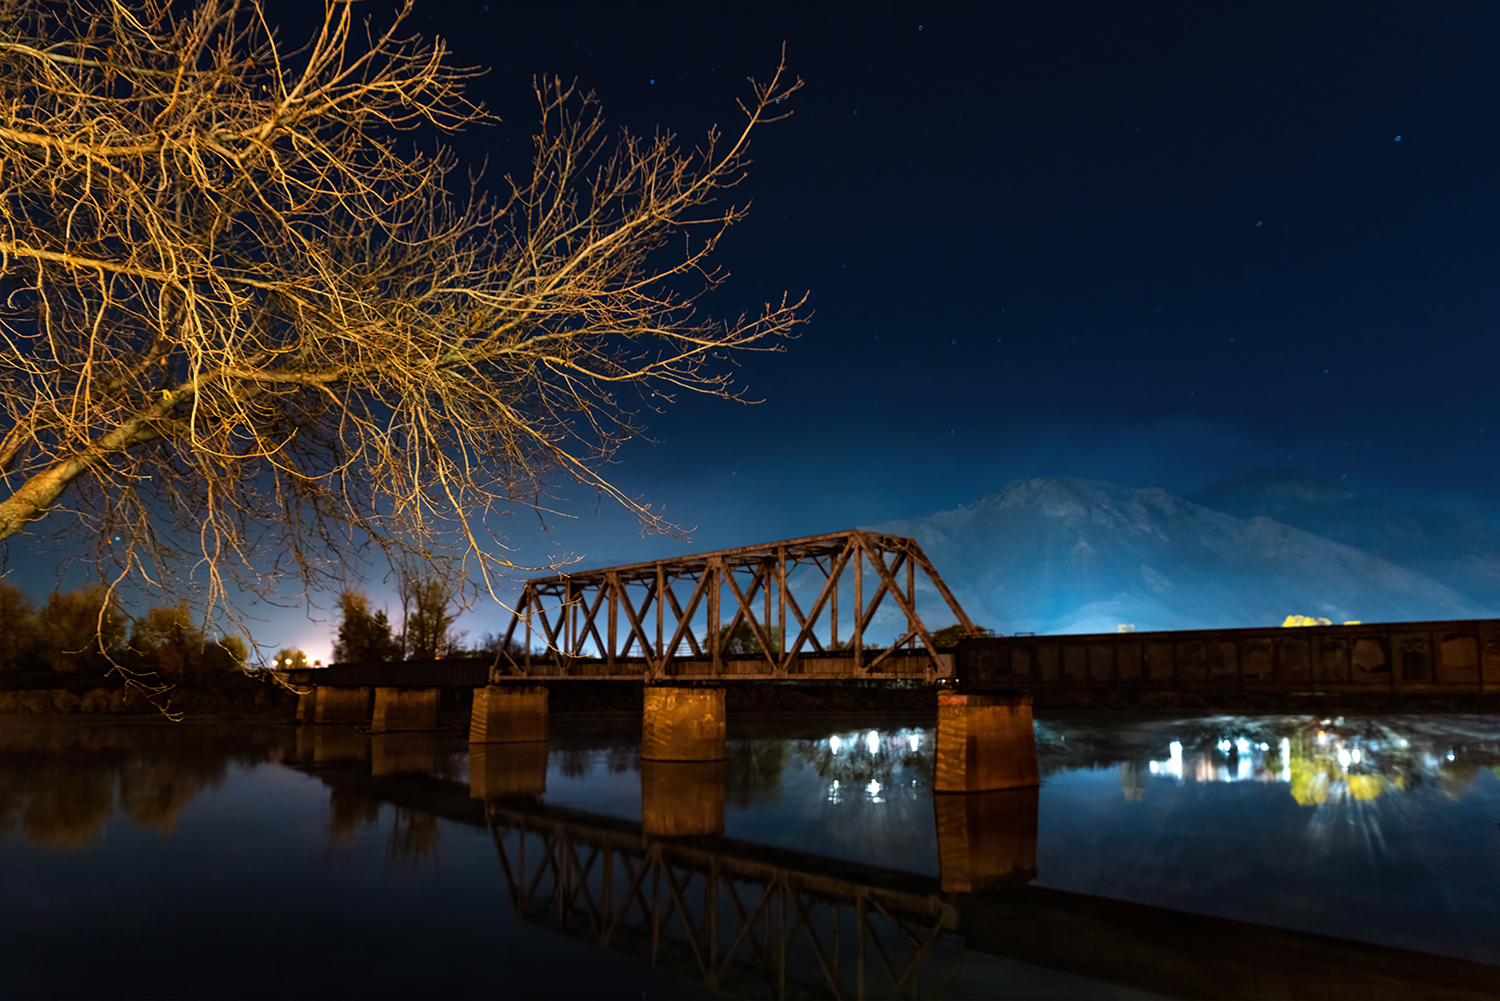 panoramic night view with tree and bridge over lake